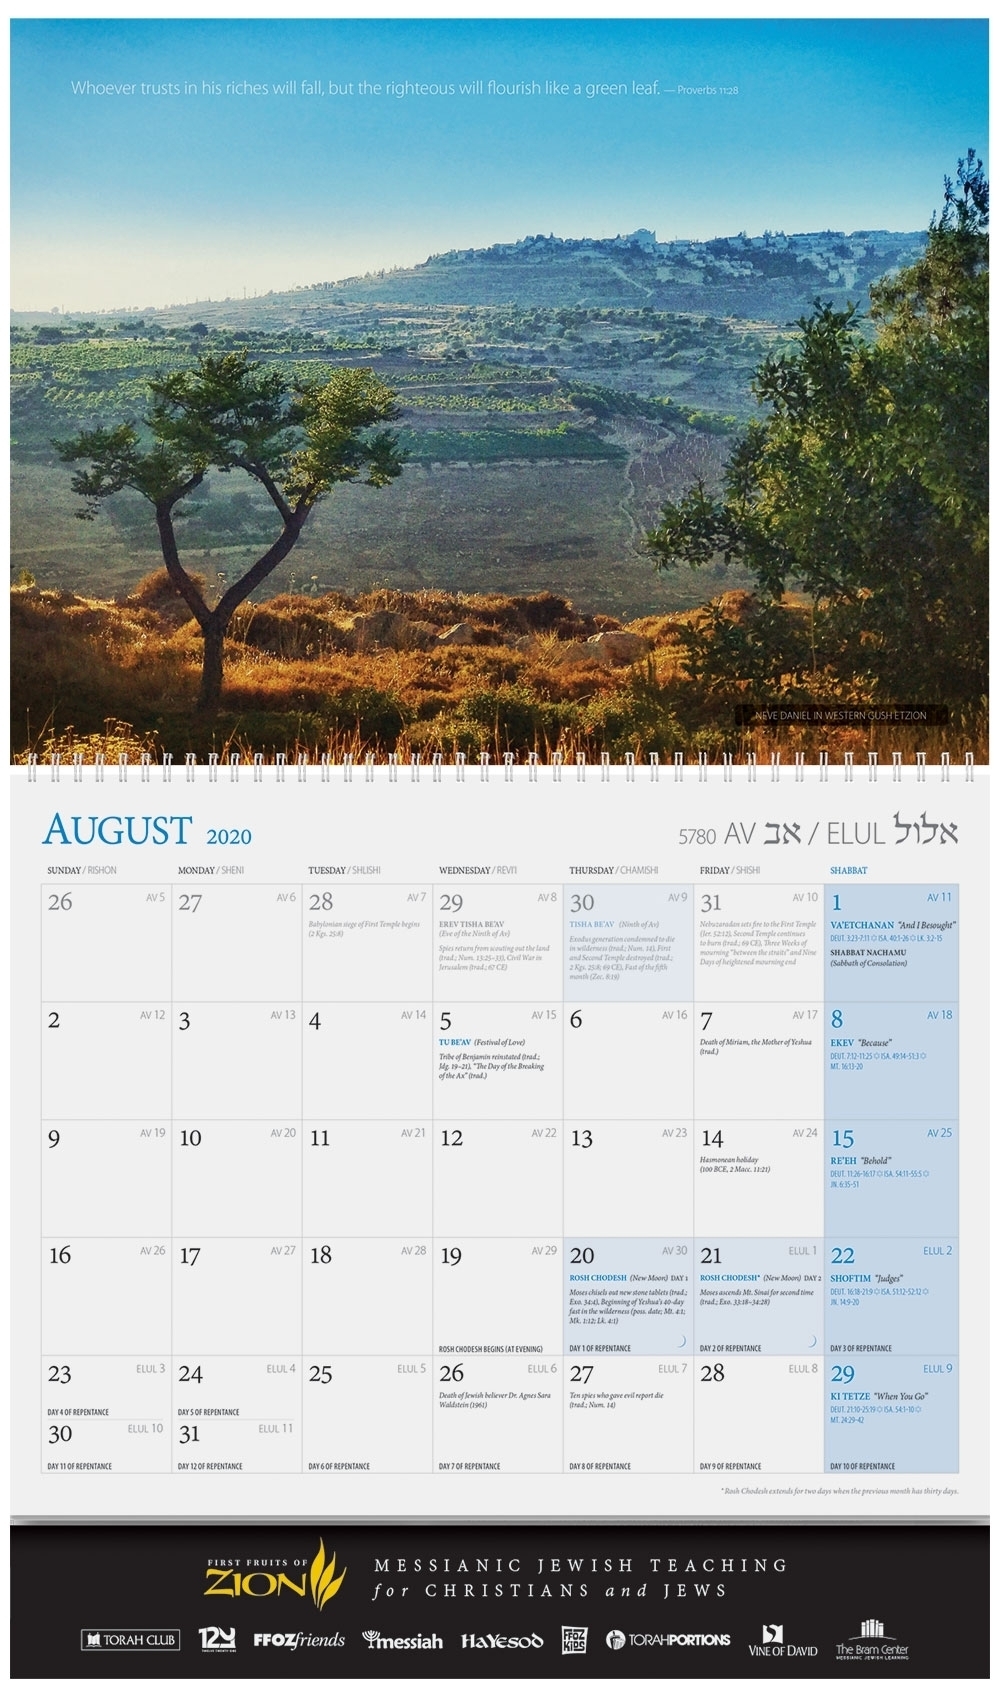 Weekly Torah Parsha Calendar For 2019/2020 - Calendar with Weekly Torah Reading Portions Calendar